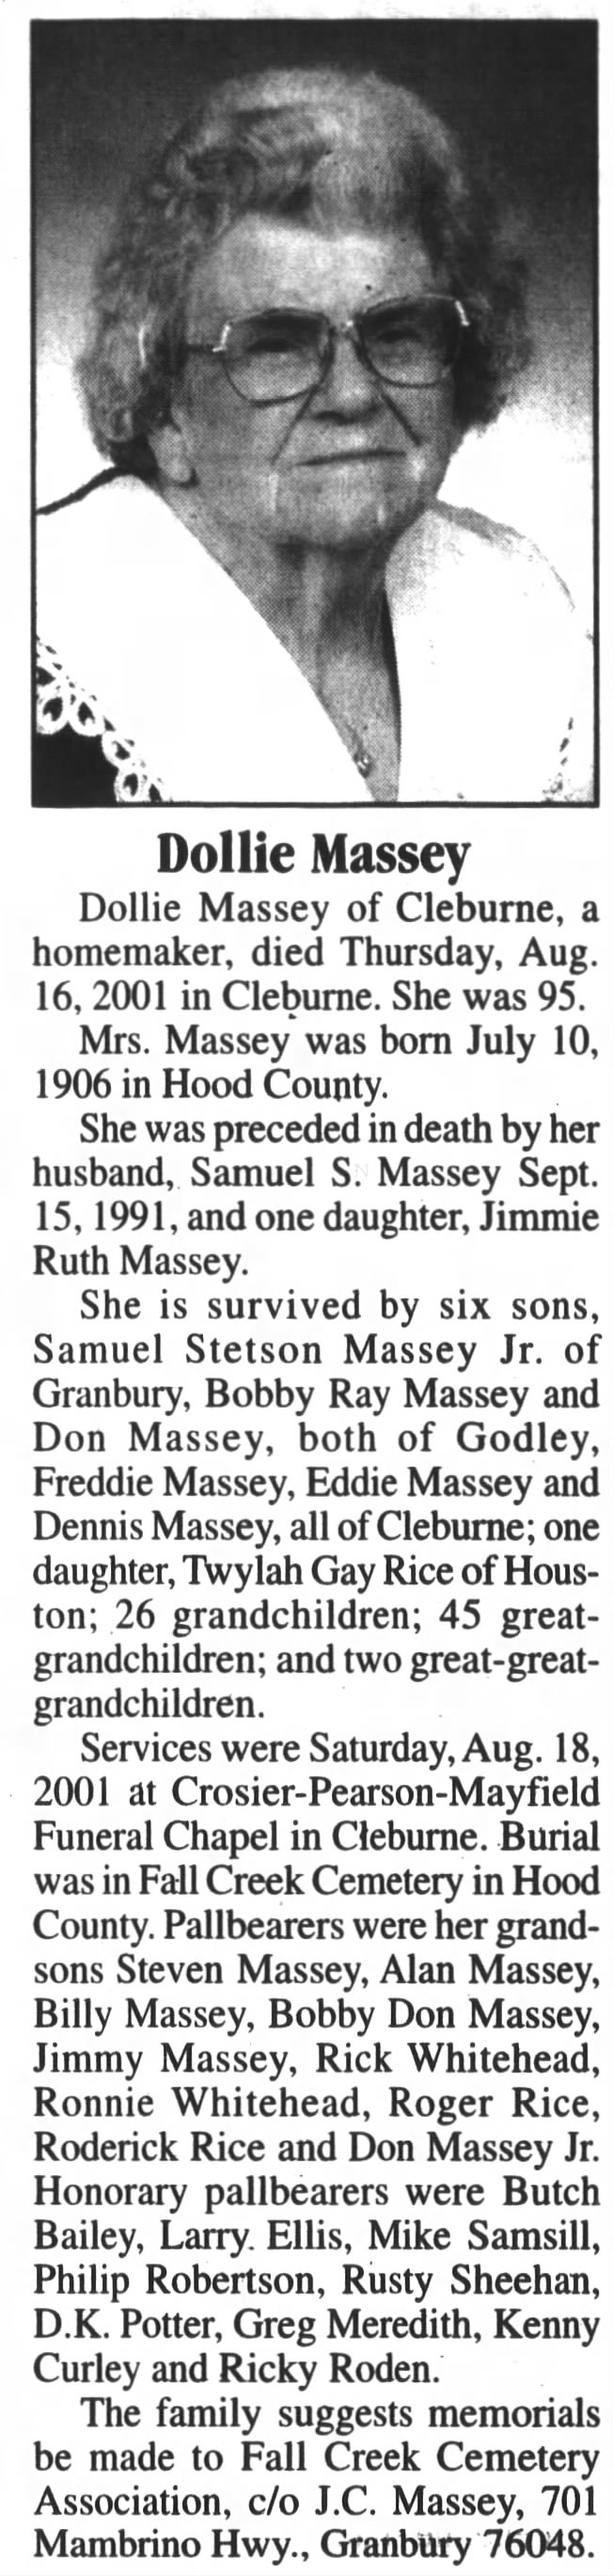 Dollie Massey Obituary; Hood County News; August 23, 2001